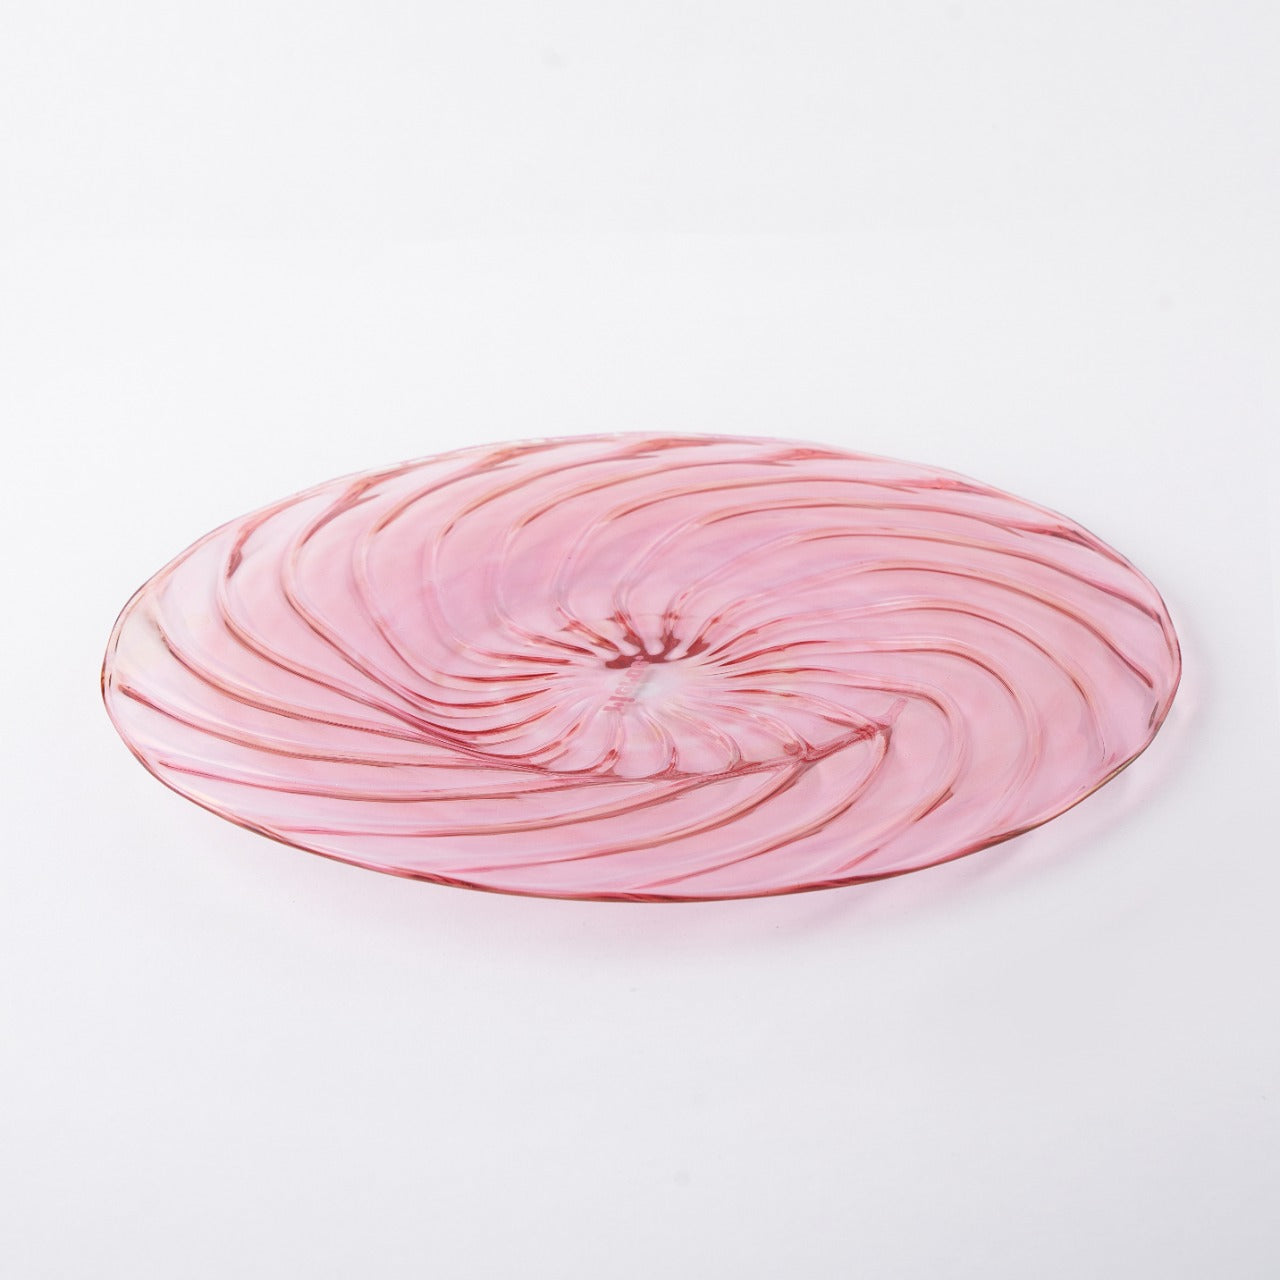 Rambassy - Hand Blown Glass Swirl Serving Plate